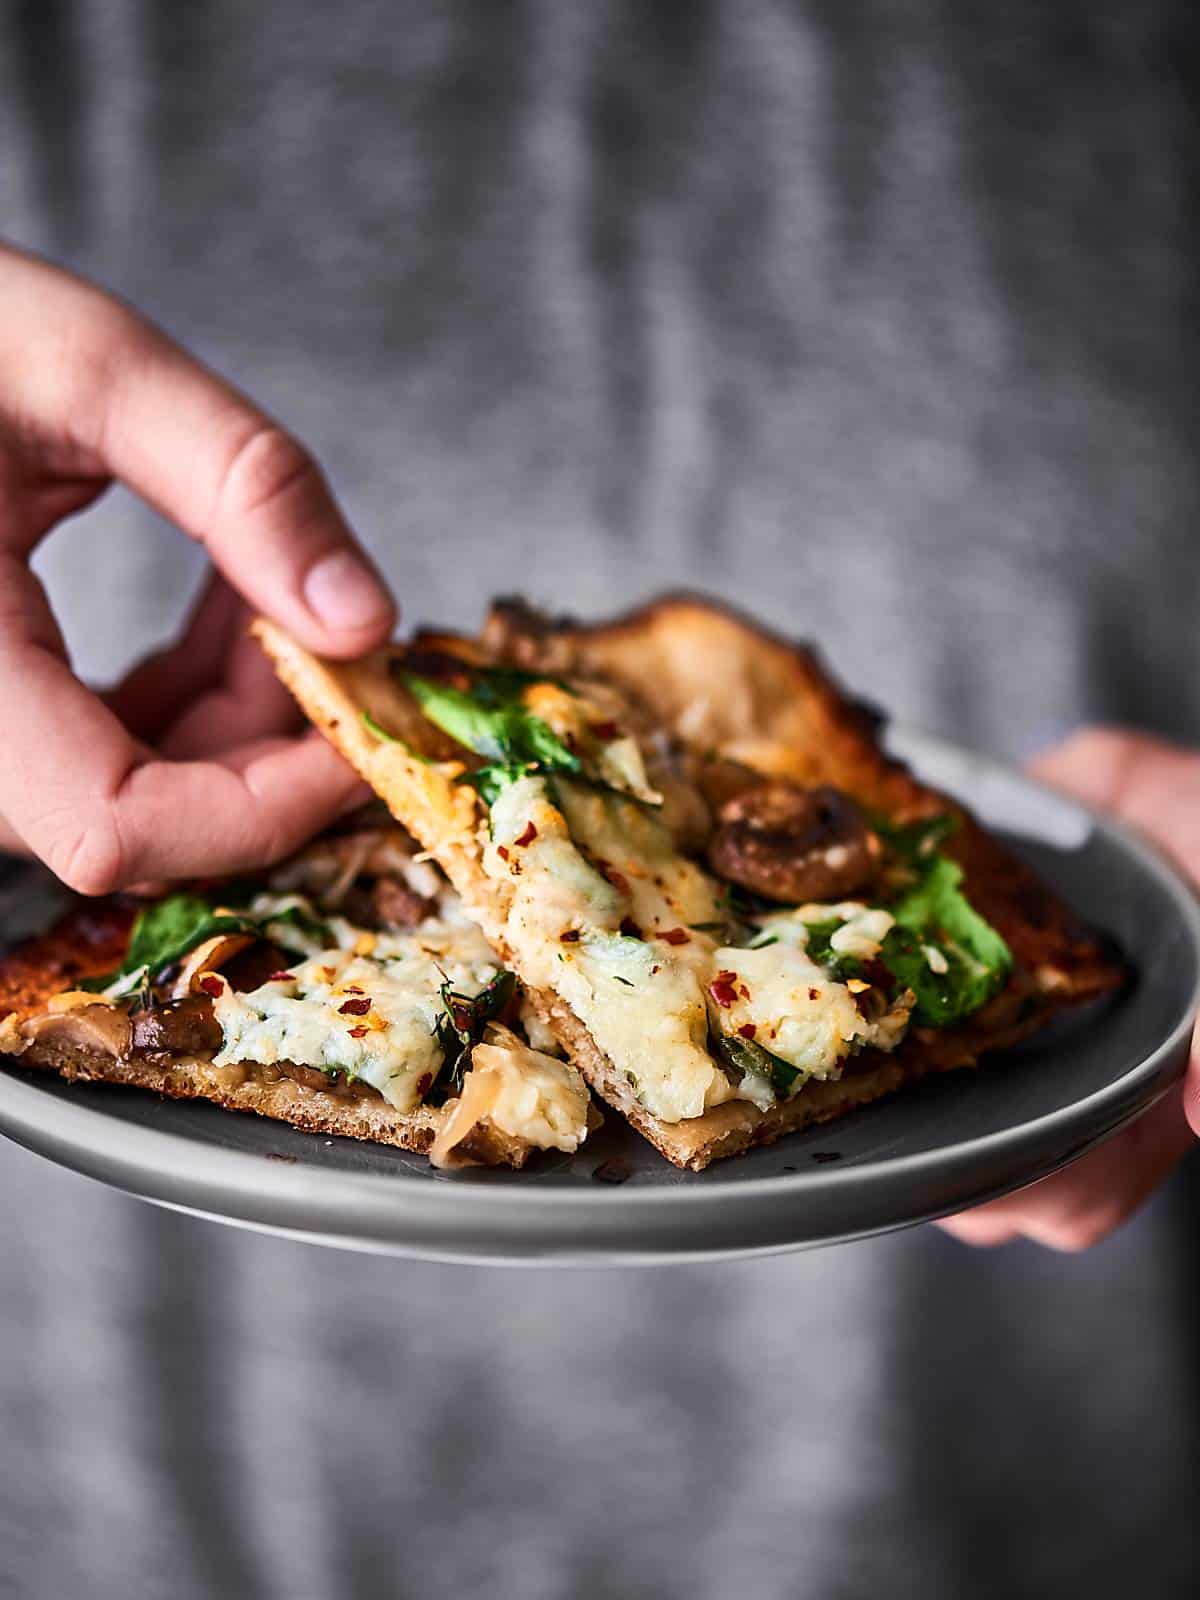 Caramelized Onion and Mushroom Pizza Recipe - Easy Vegetarian Recipe